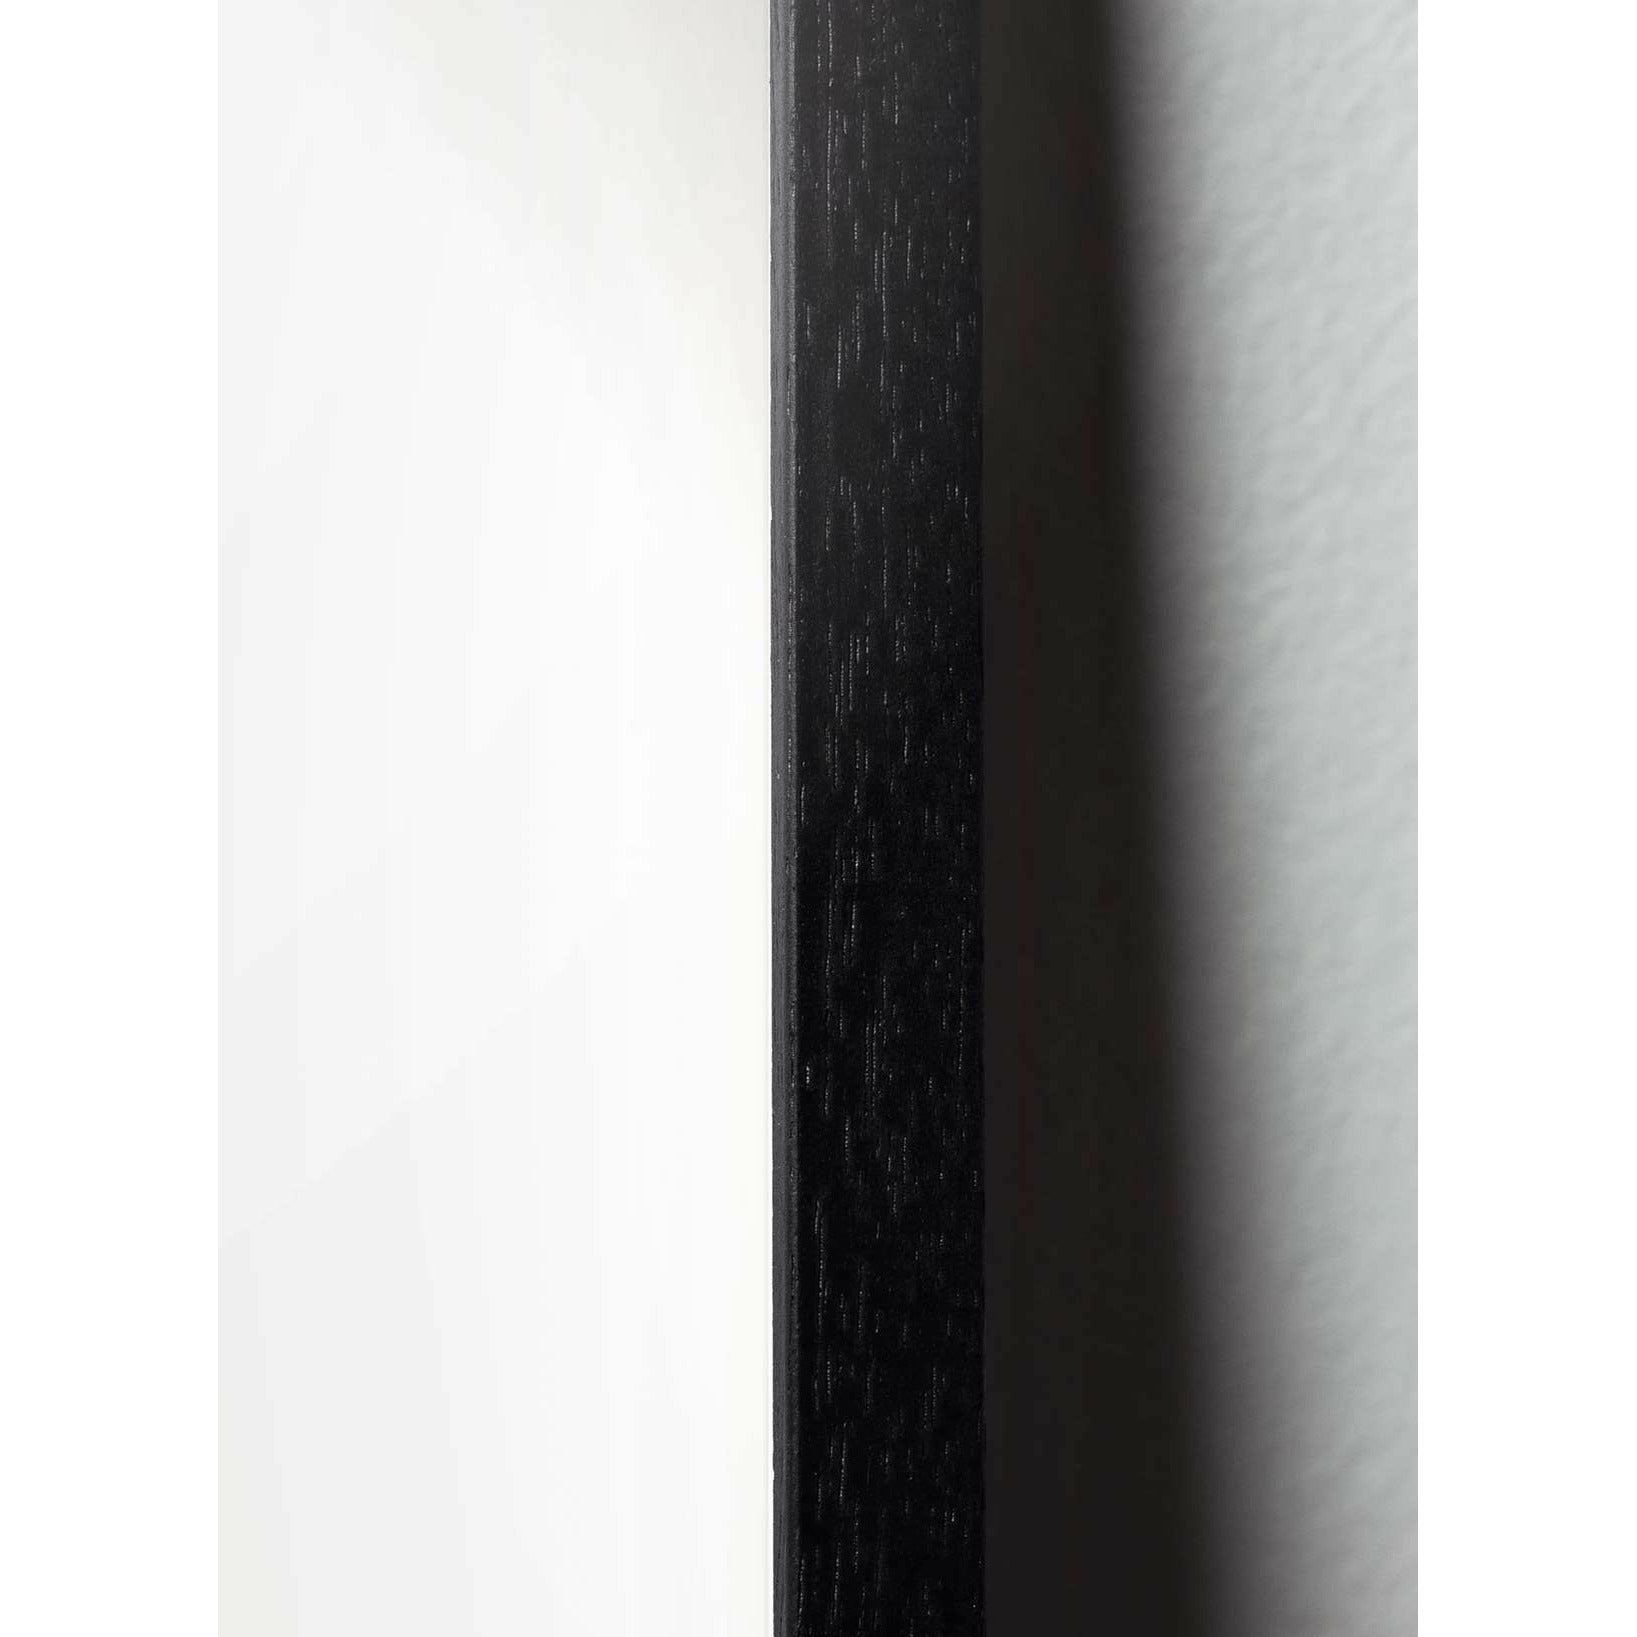 Brainchild Egg Figures Poster, Frame Made Of Black Lacquered Wood A5, Black